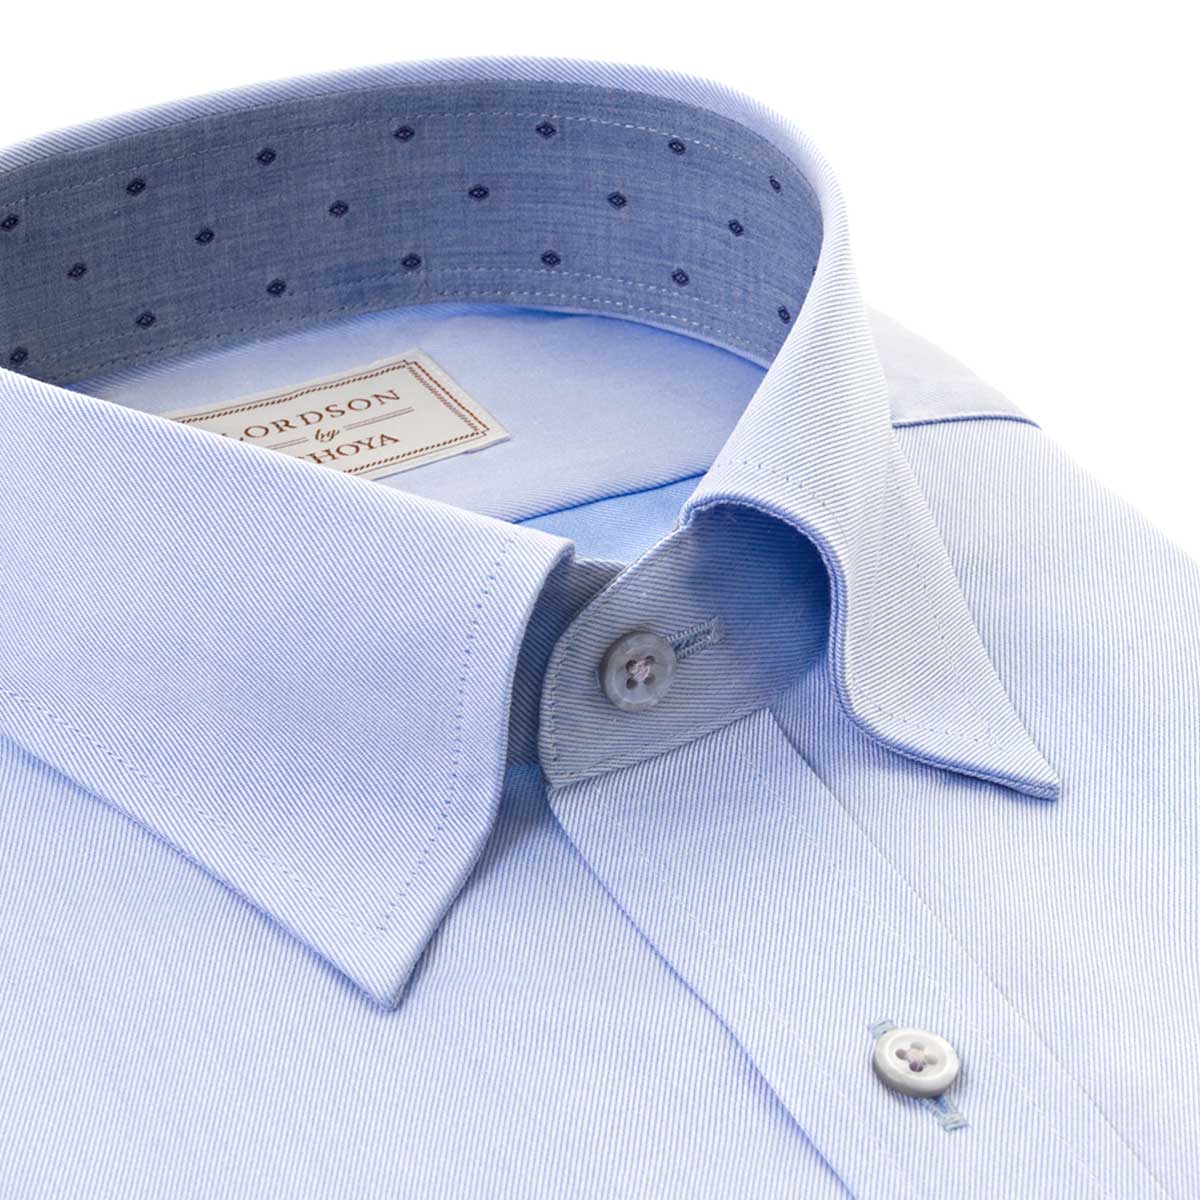 LORDSON Yシャツ 長袖 ワイシャツ メンズ ショートスナップダウン 形態安定 サックスブルー ツイル ダンガリー 綿100% 2202ft  LORDSON by CHOYA(cod701-250) | CHOYA シャツ